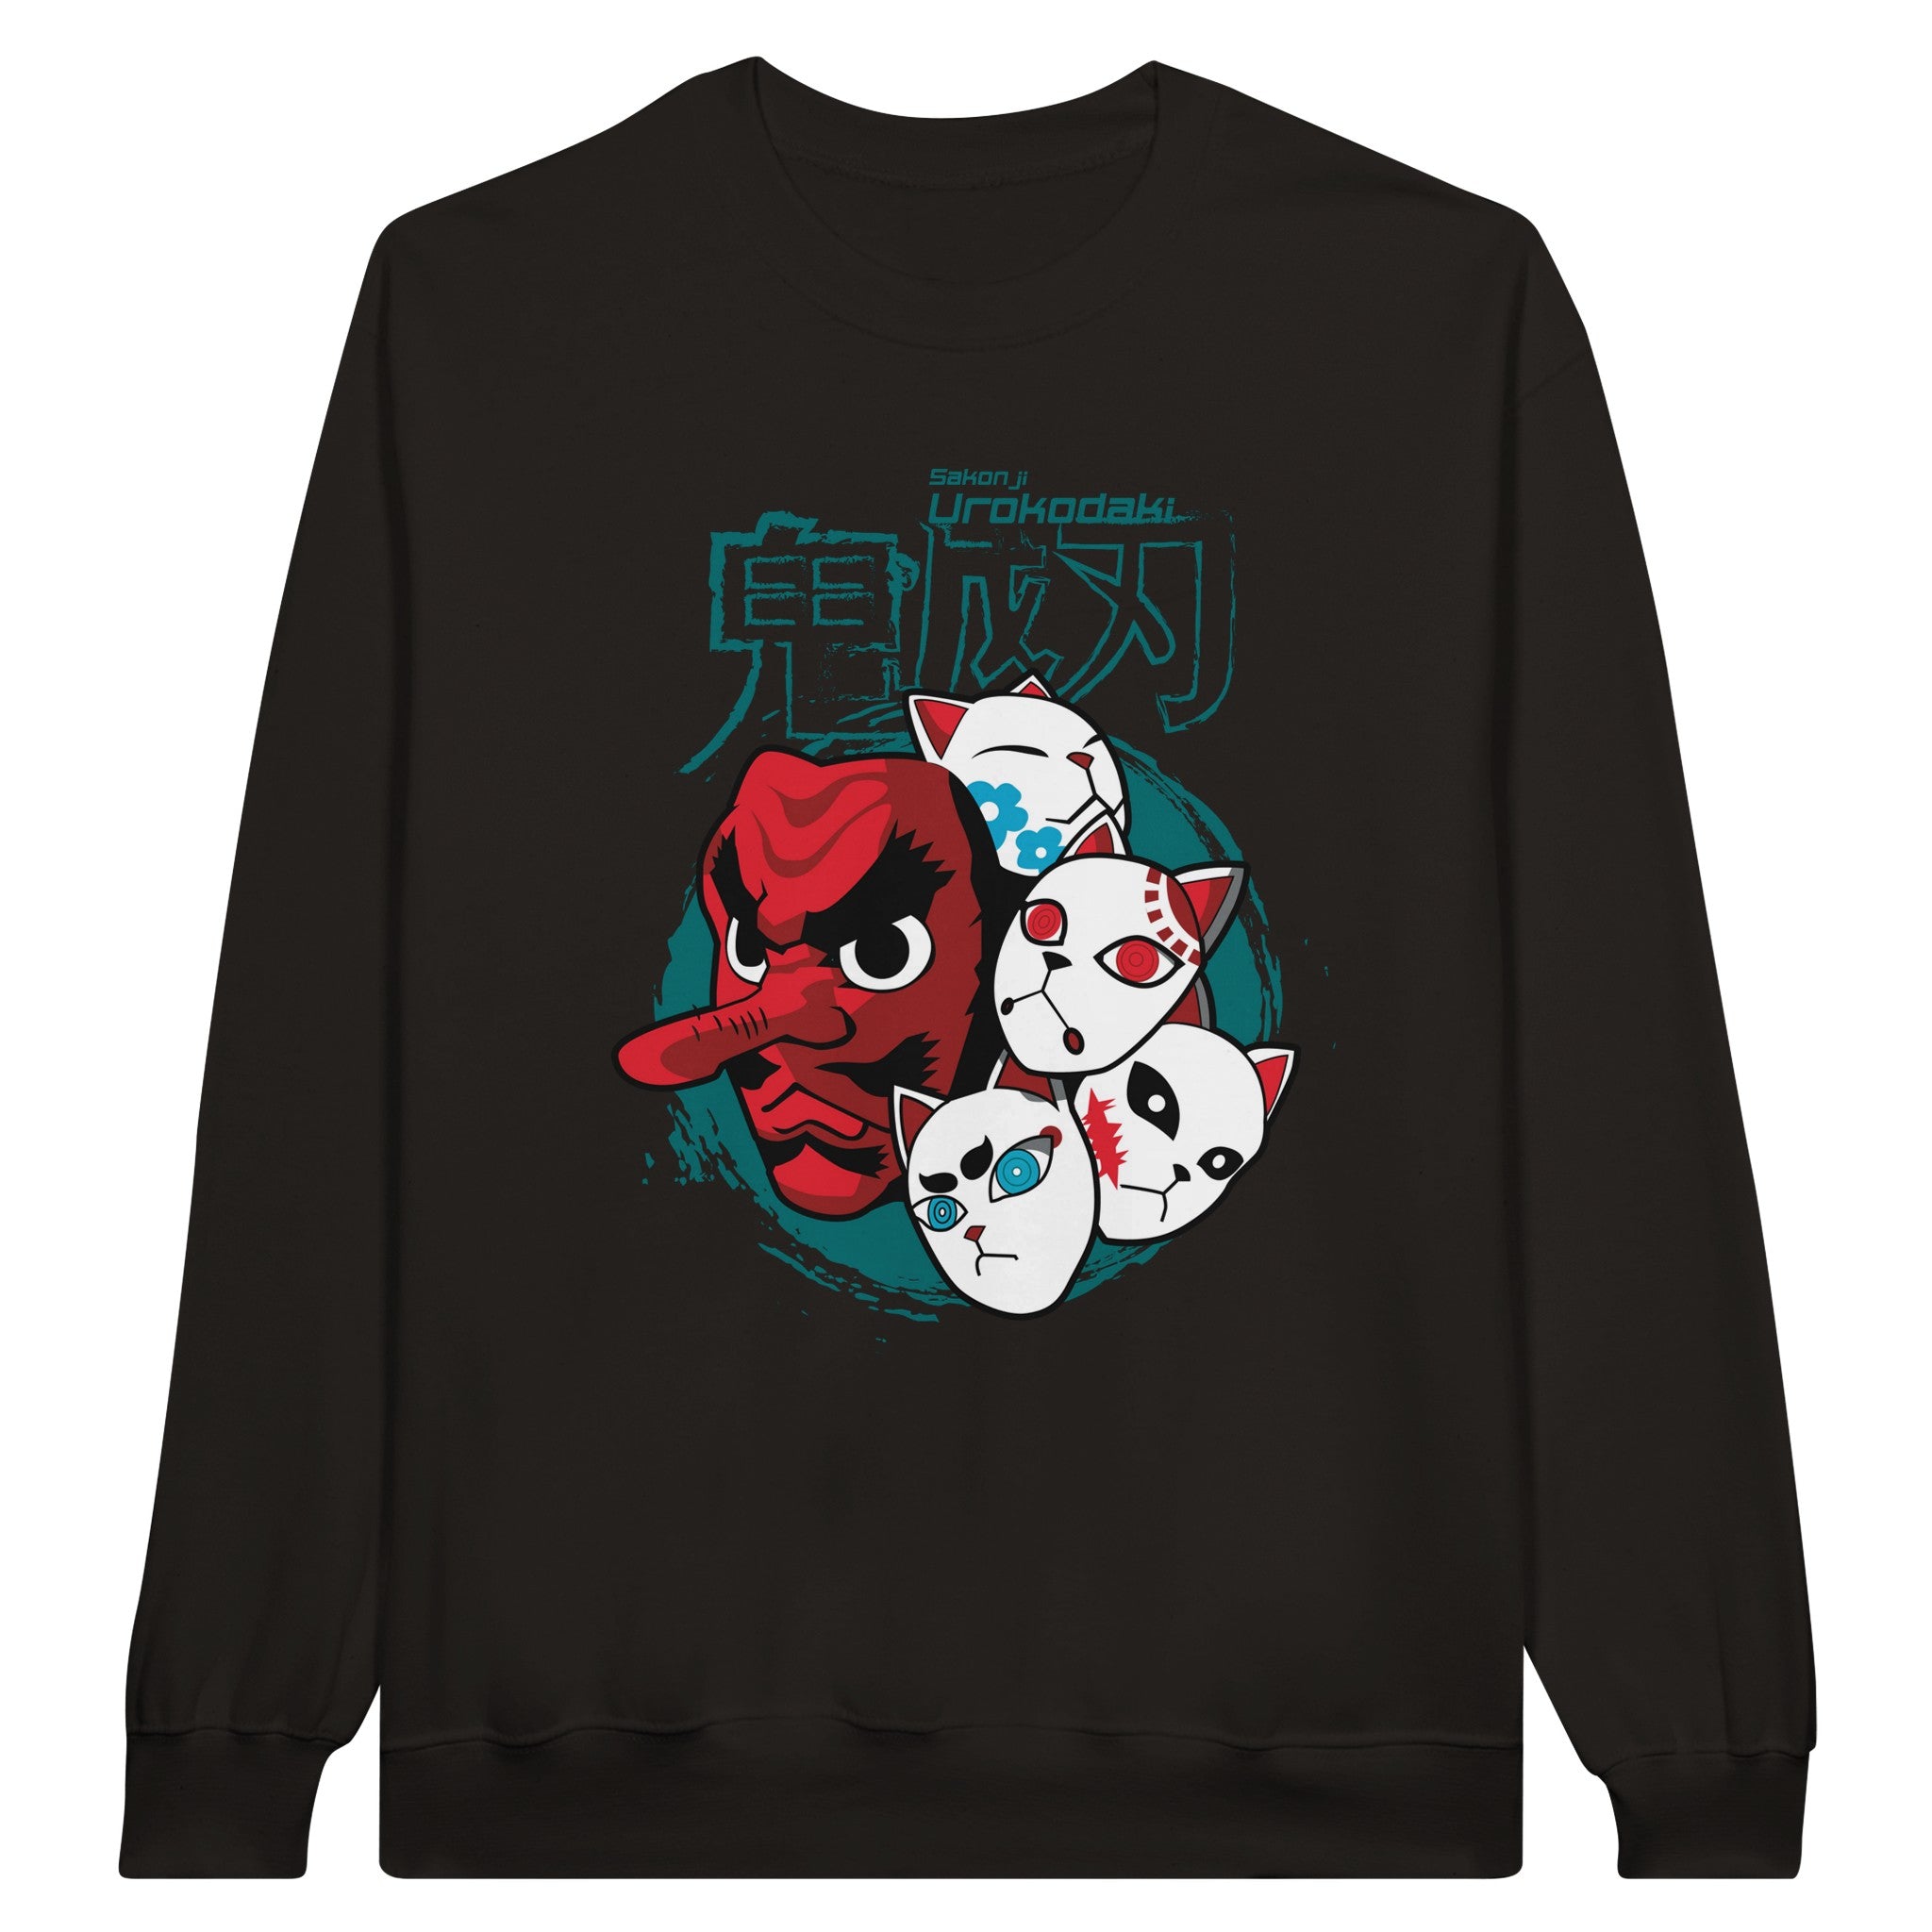 shop and buy demon slayer anime clothing Urokodaki sweatshirt/jumper/longsleeve